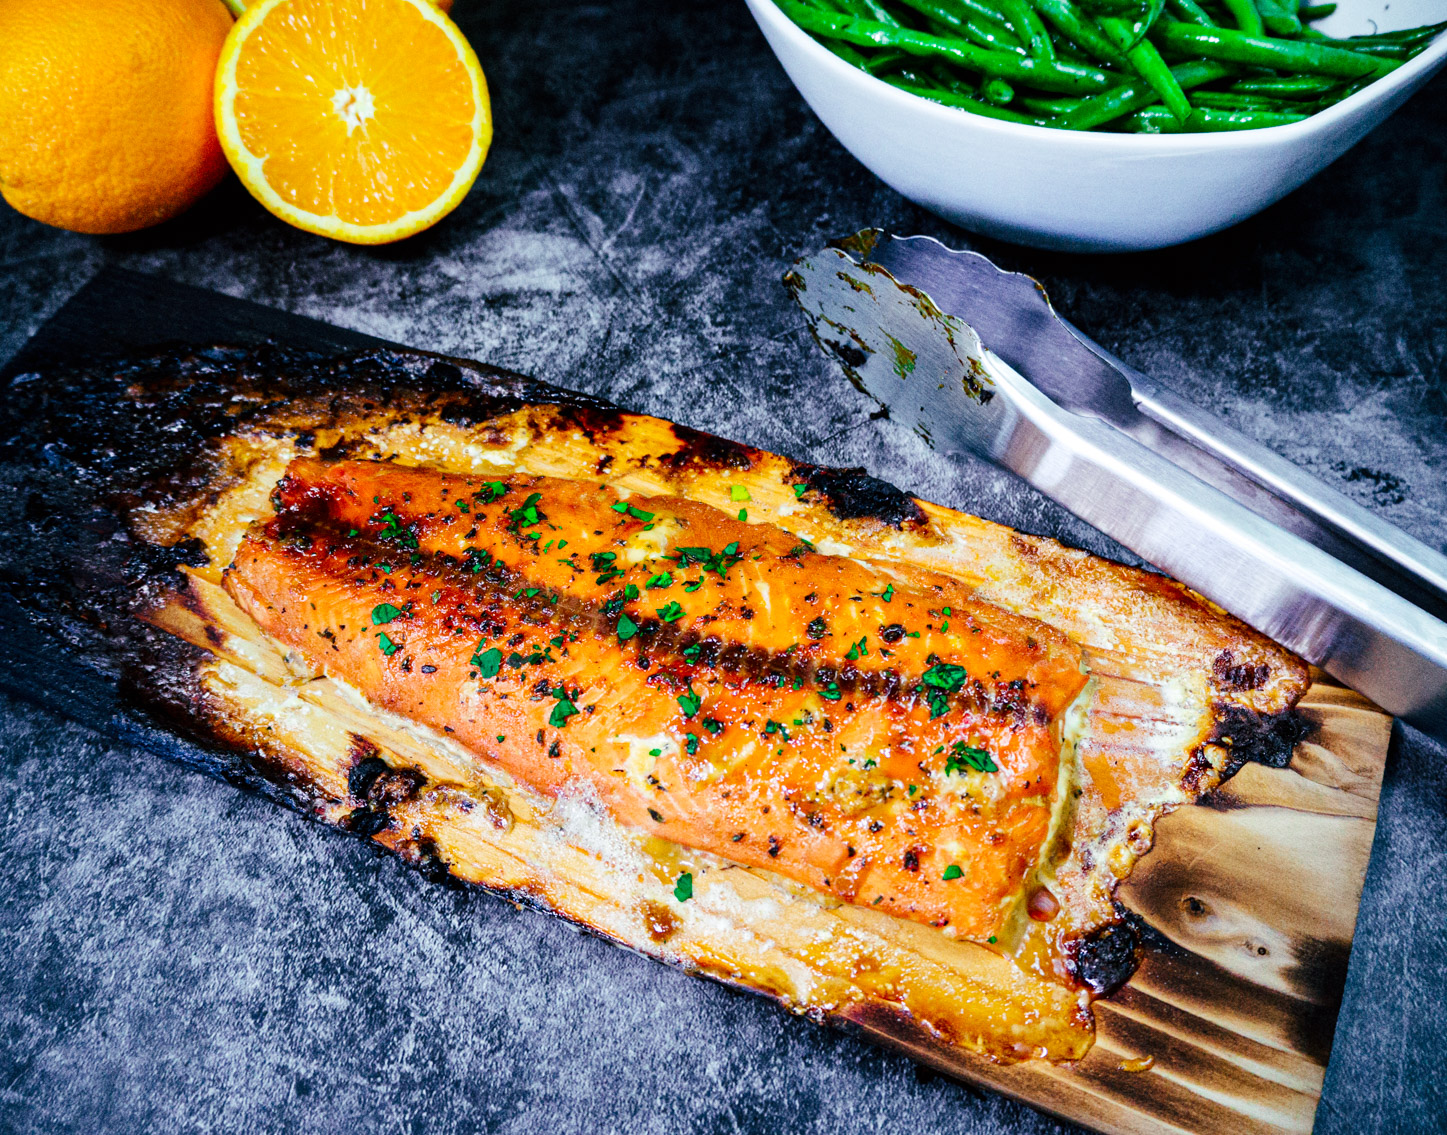 Traeger Cedar Plank Salmon: Grilling Salmon on Cedar Planks with Traeger